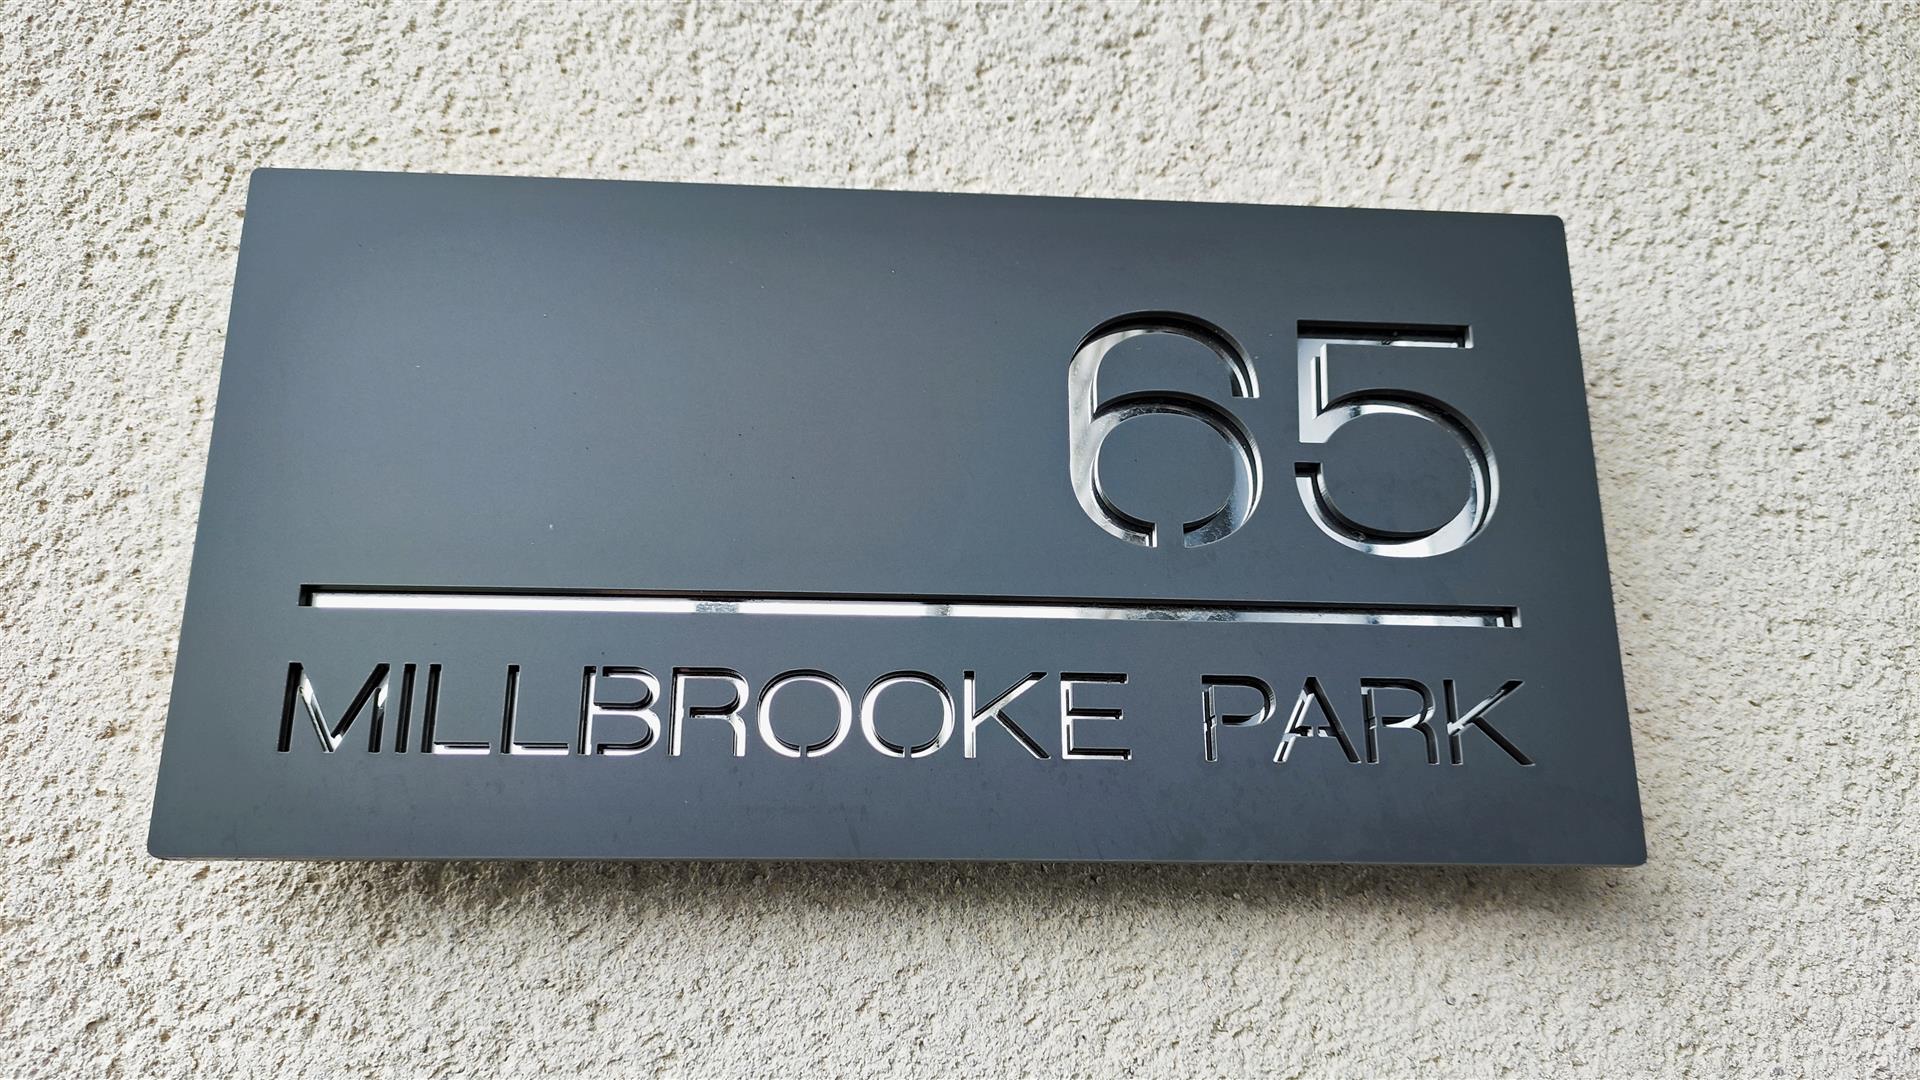 65 Millbrooke Park